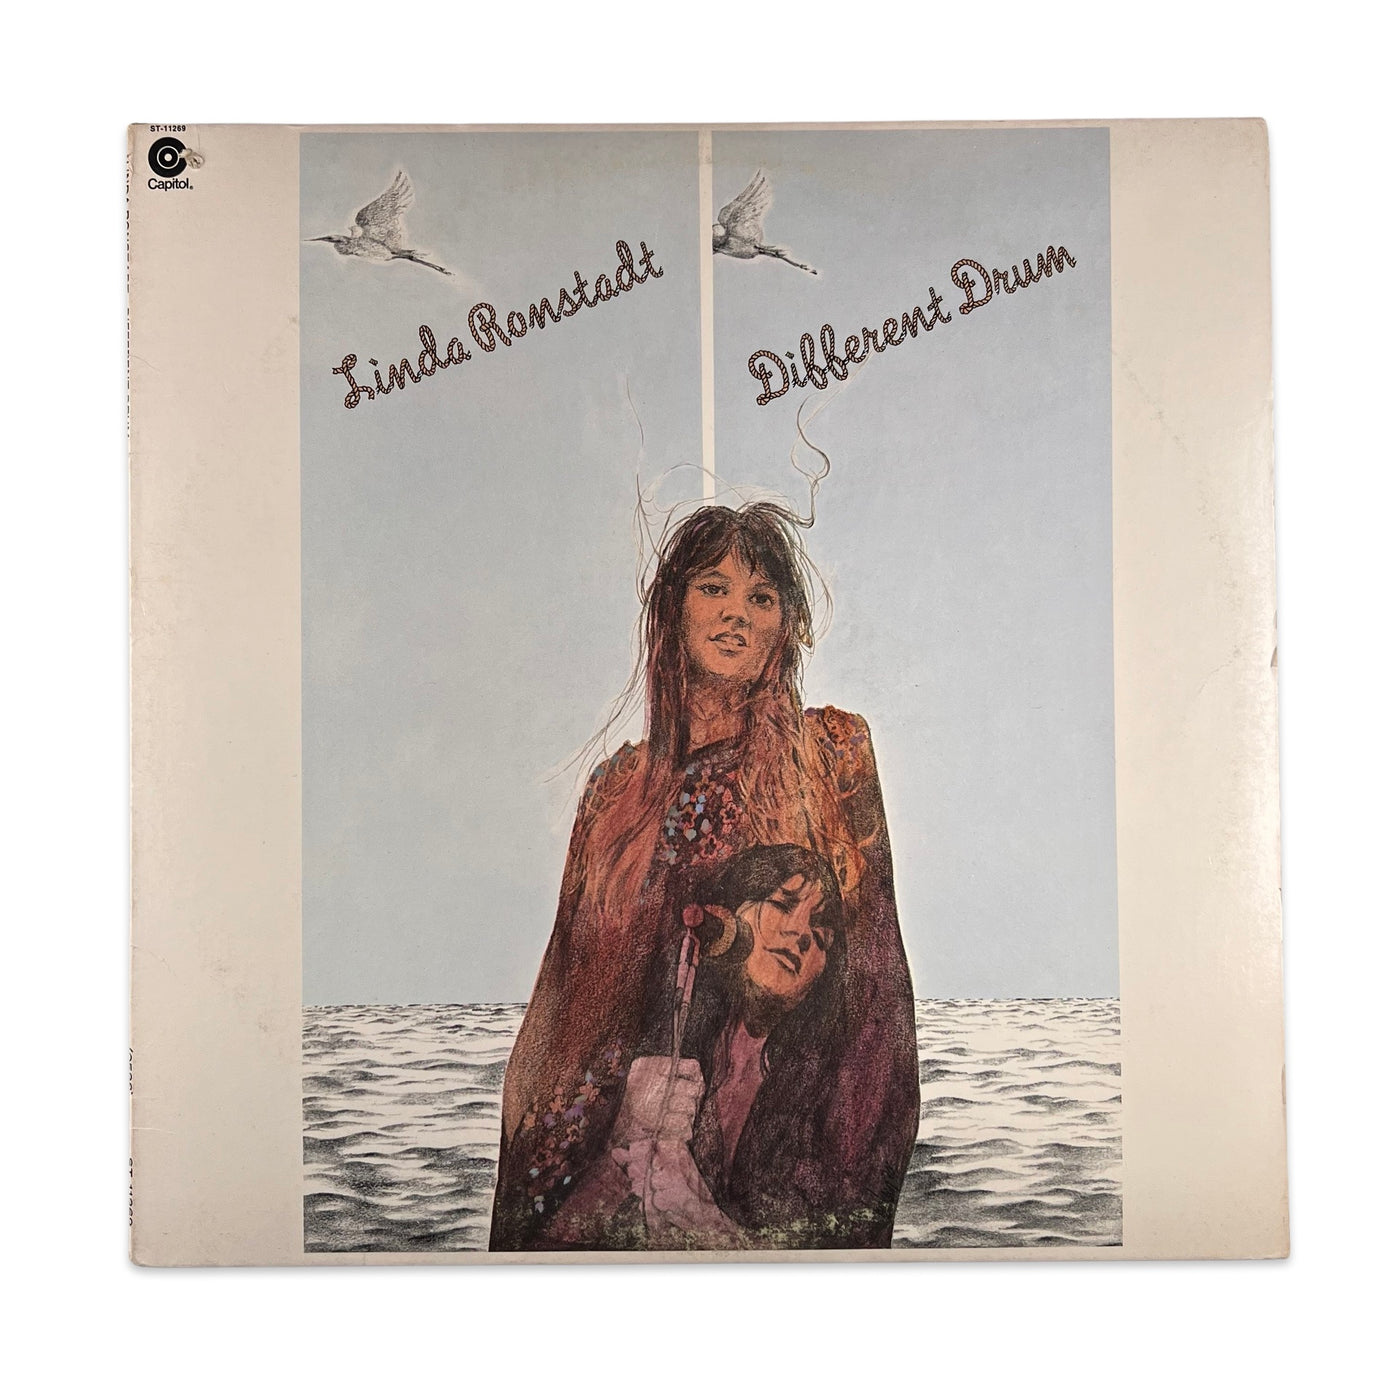 Linda Ronstadt – Different Drum